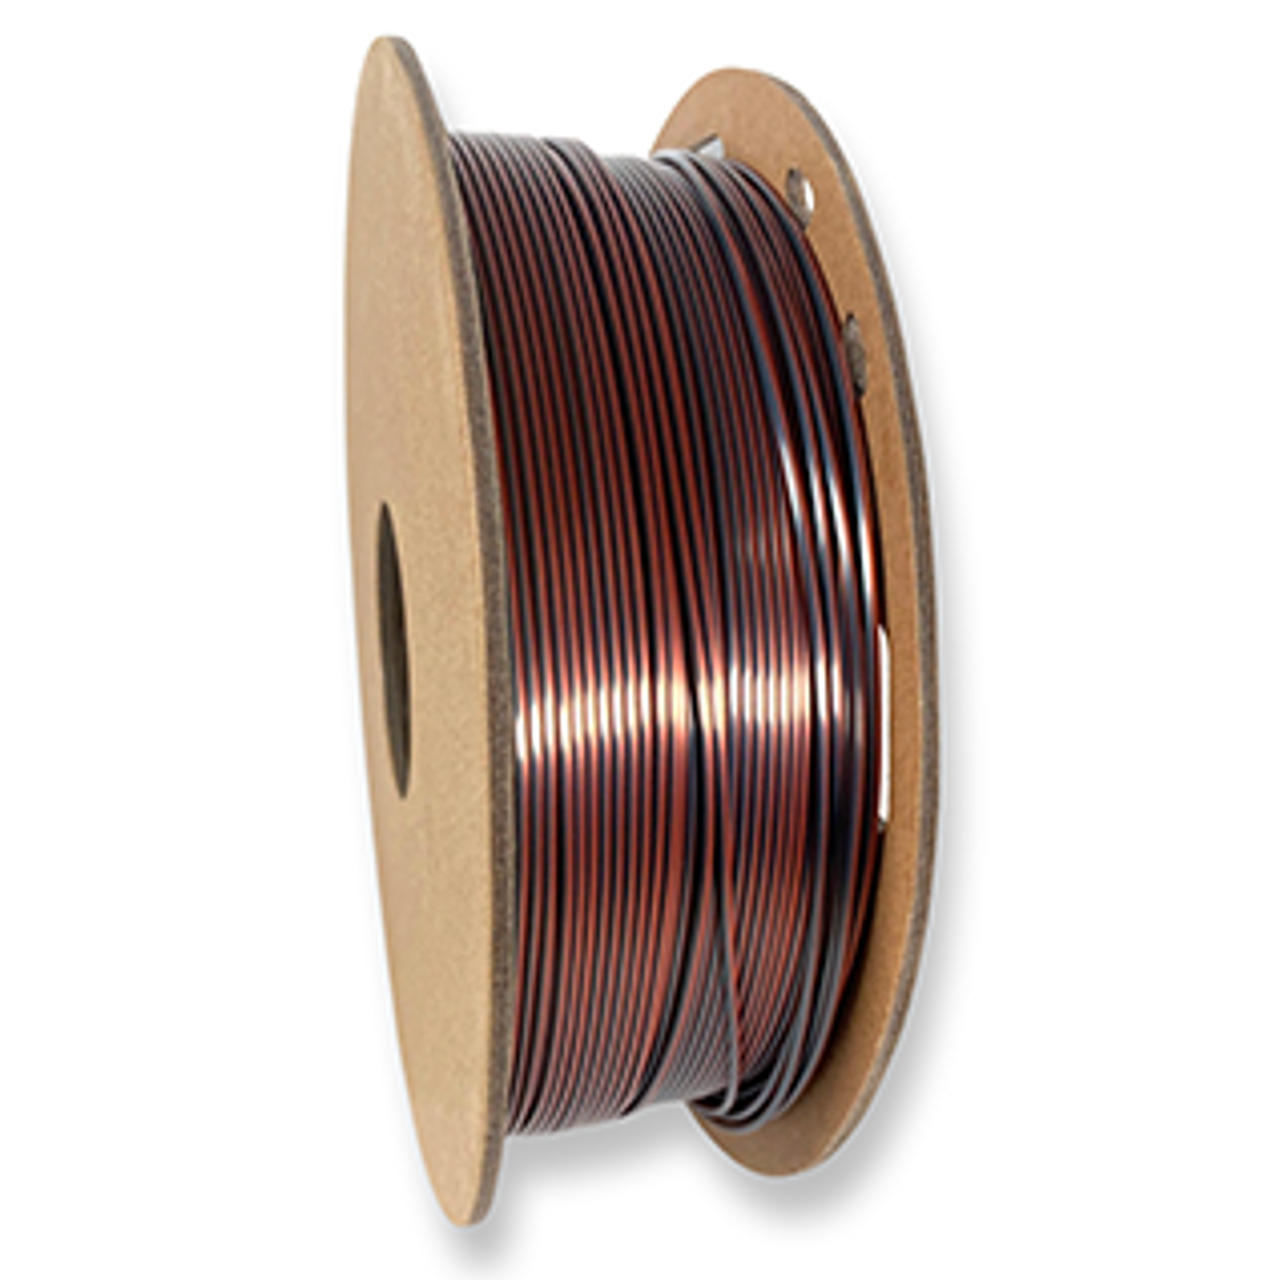 Fuse 3D Tri Colour Silk Gold-Copper-Black 3D Printing Filament